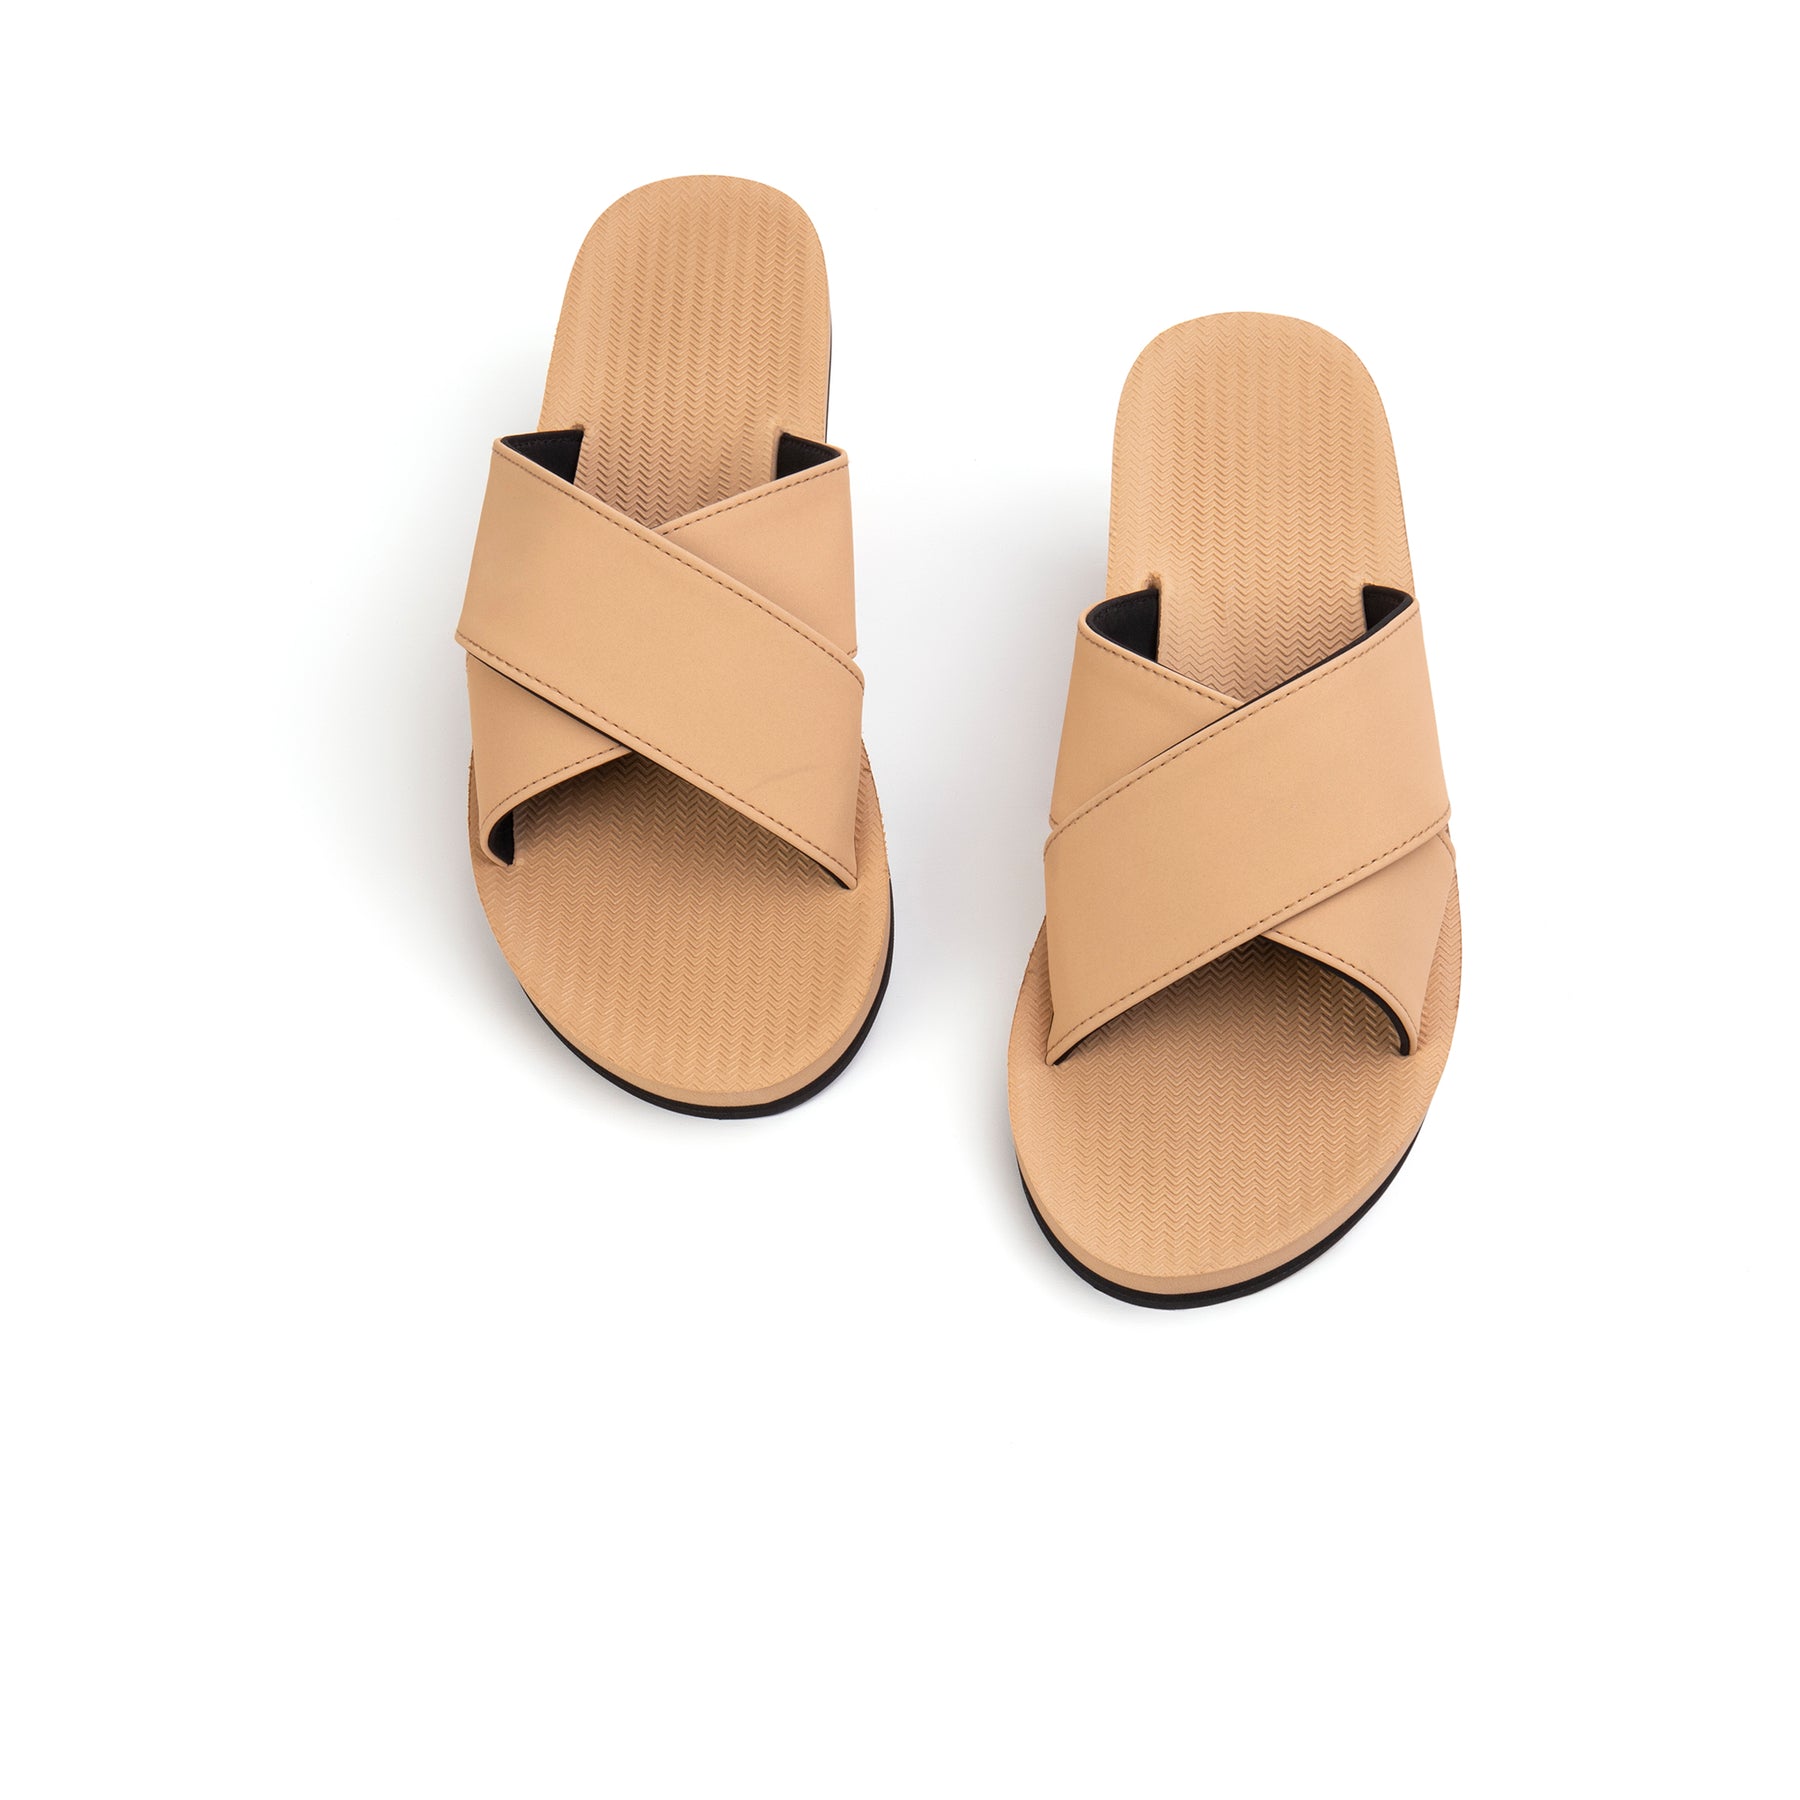 A pair of men’s light soil cross sandals